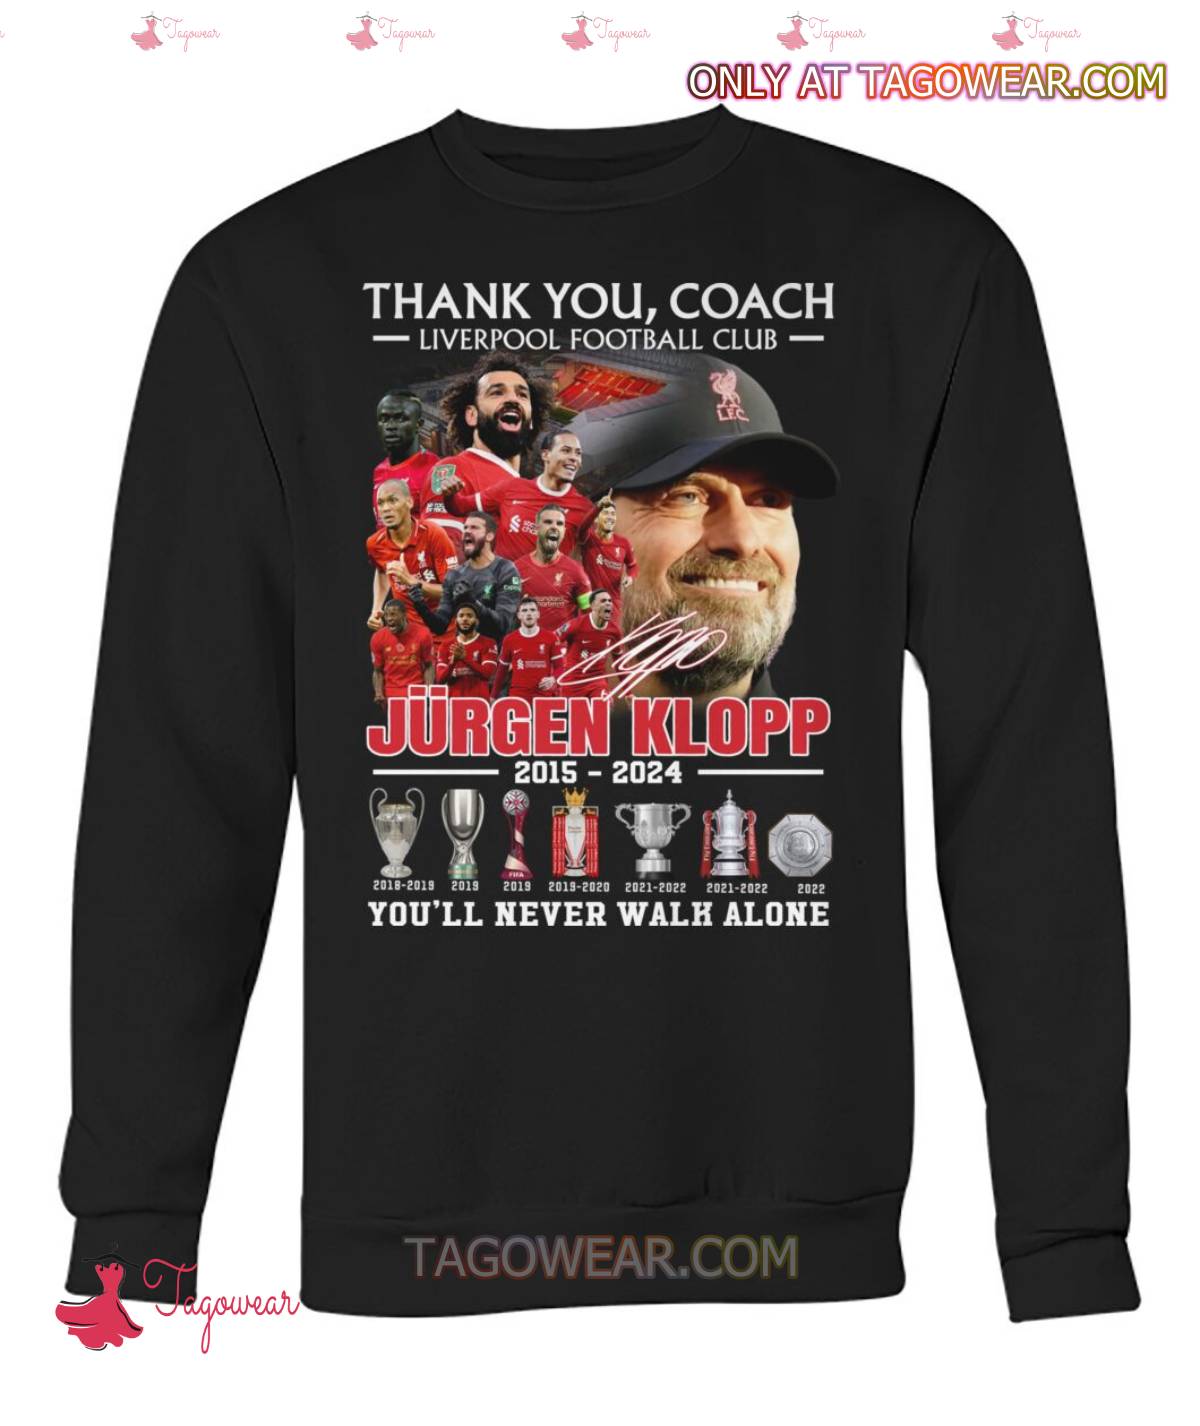 Thank You Coach Liverpool Football Club Jurgen Klopp 2015-2024 You'll Never Walk Alone Shirt b